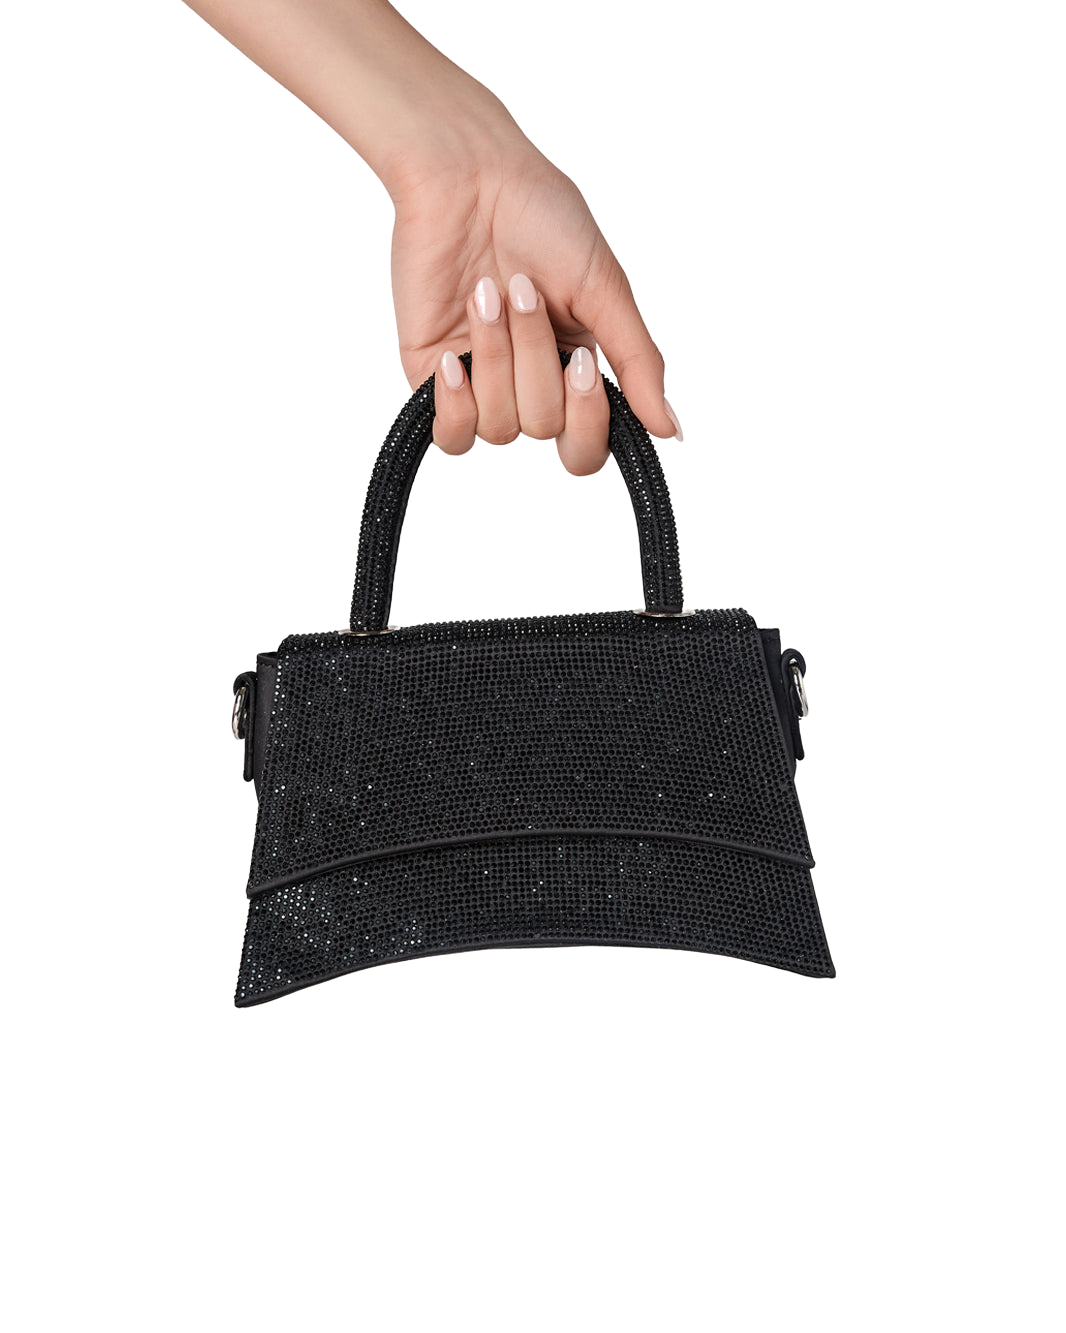 Alana Black Handbag